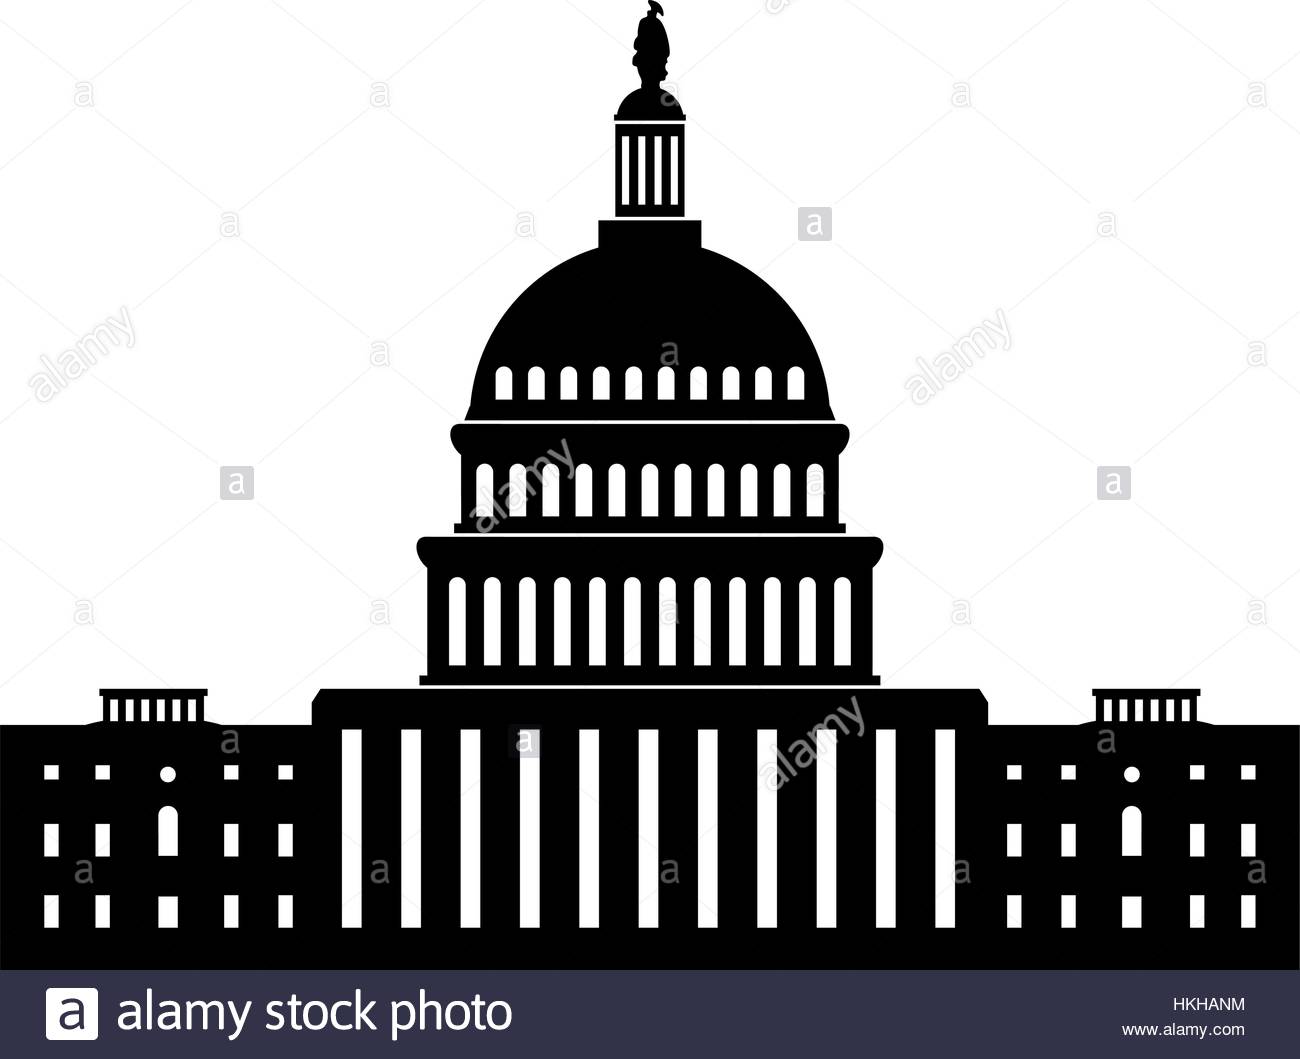 Congress icons | Noun Project